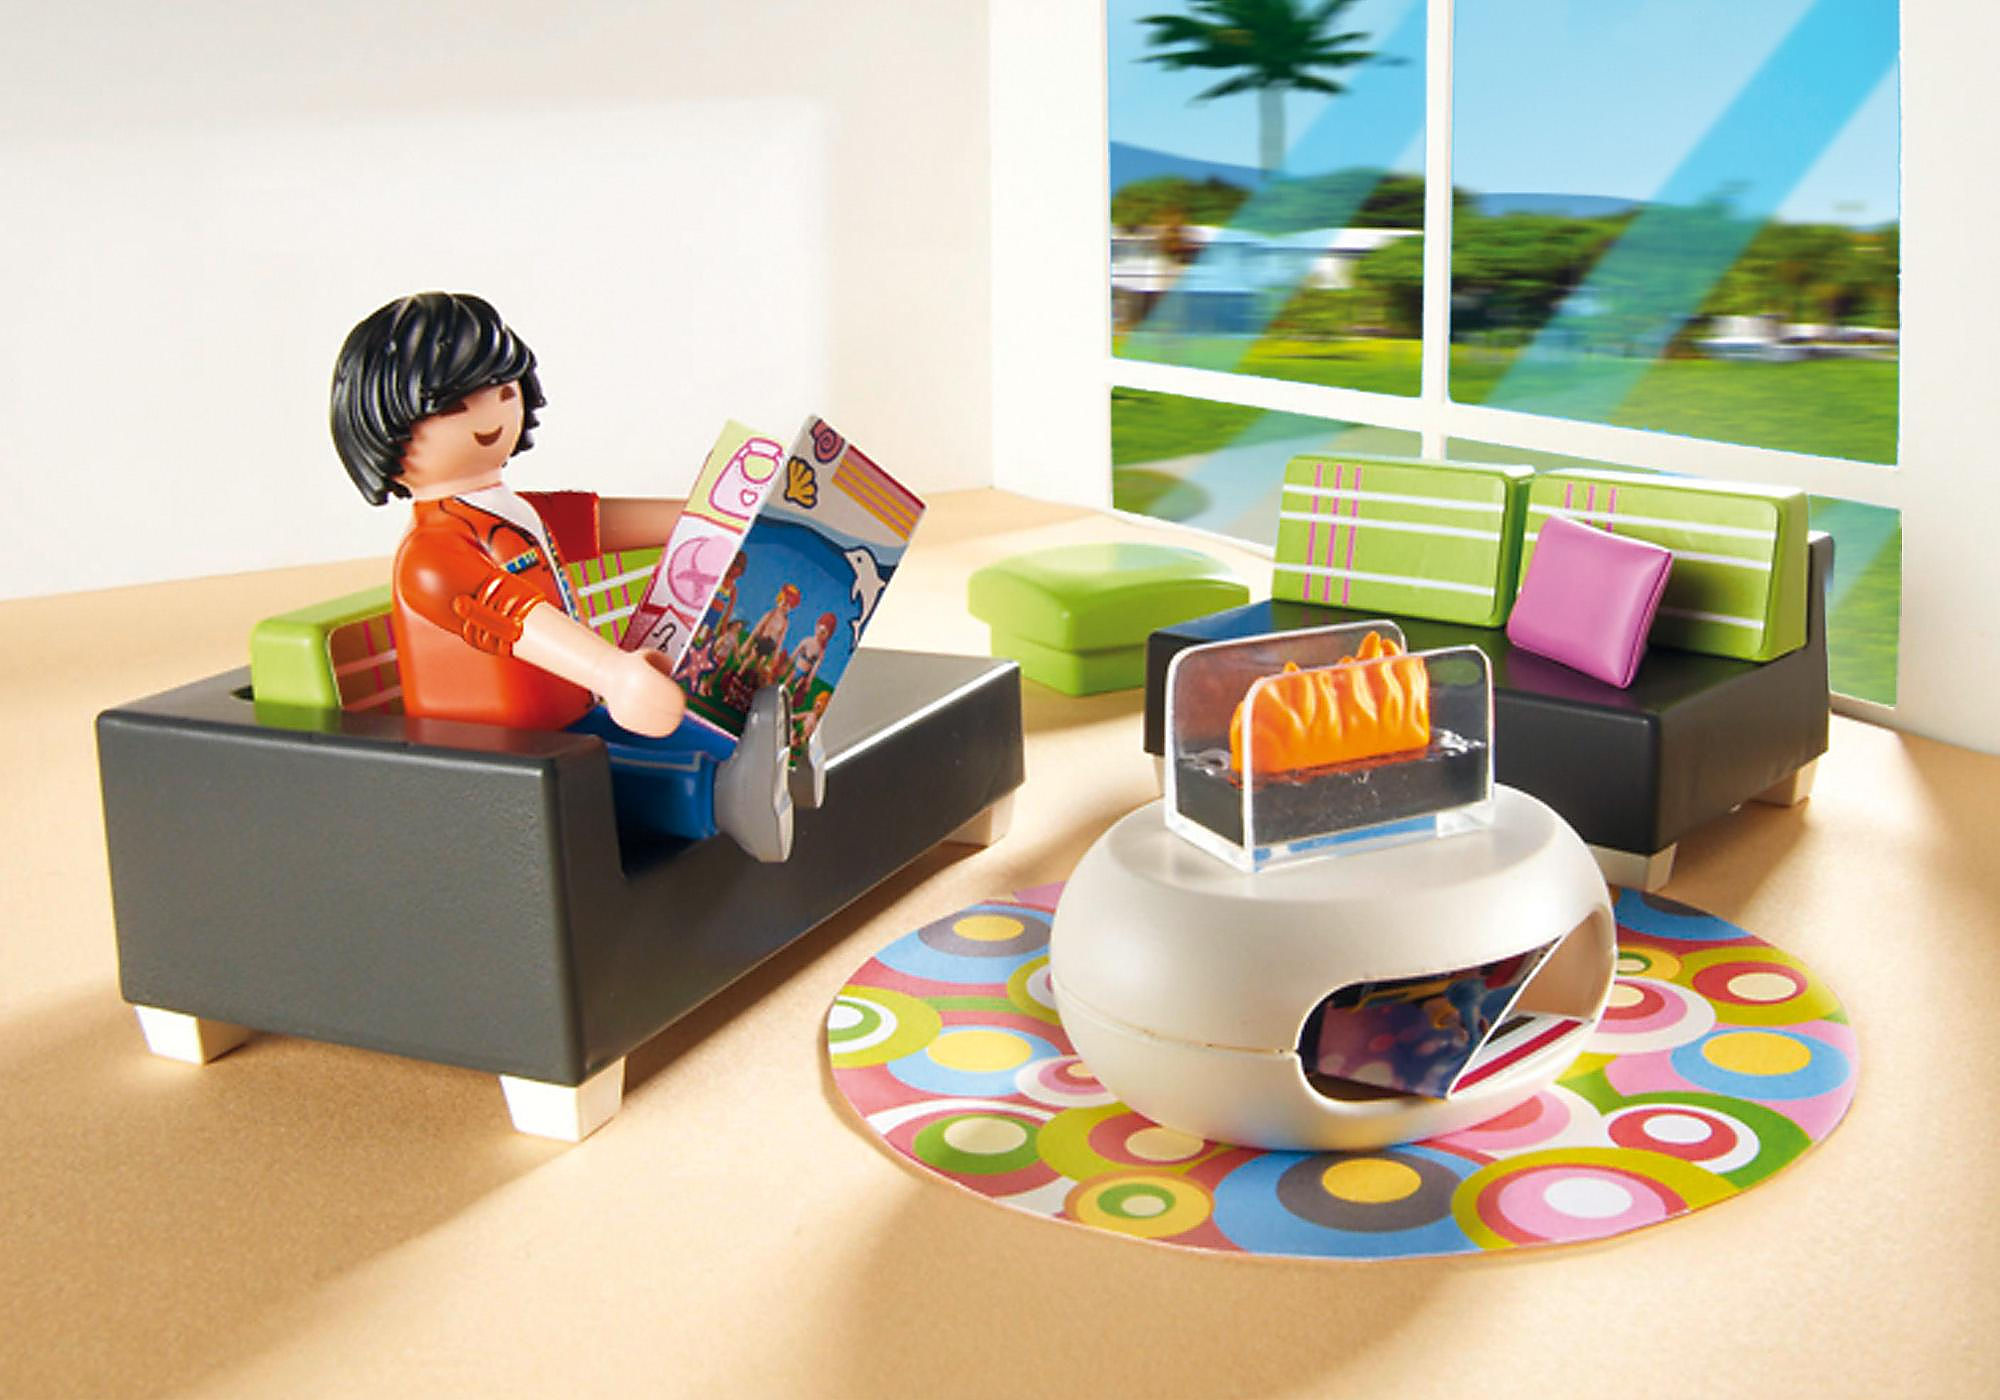 playmobil living room 5584